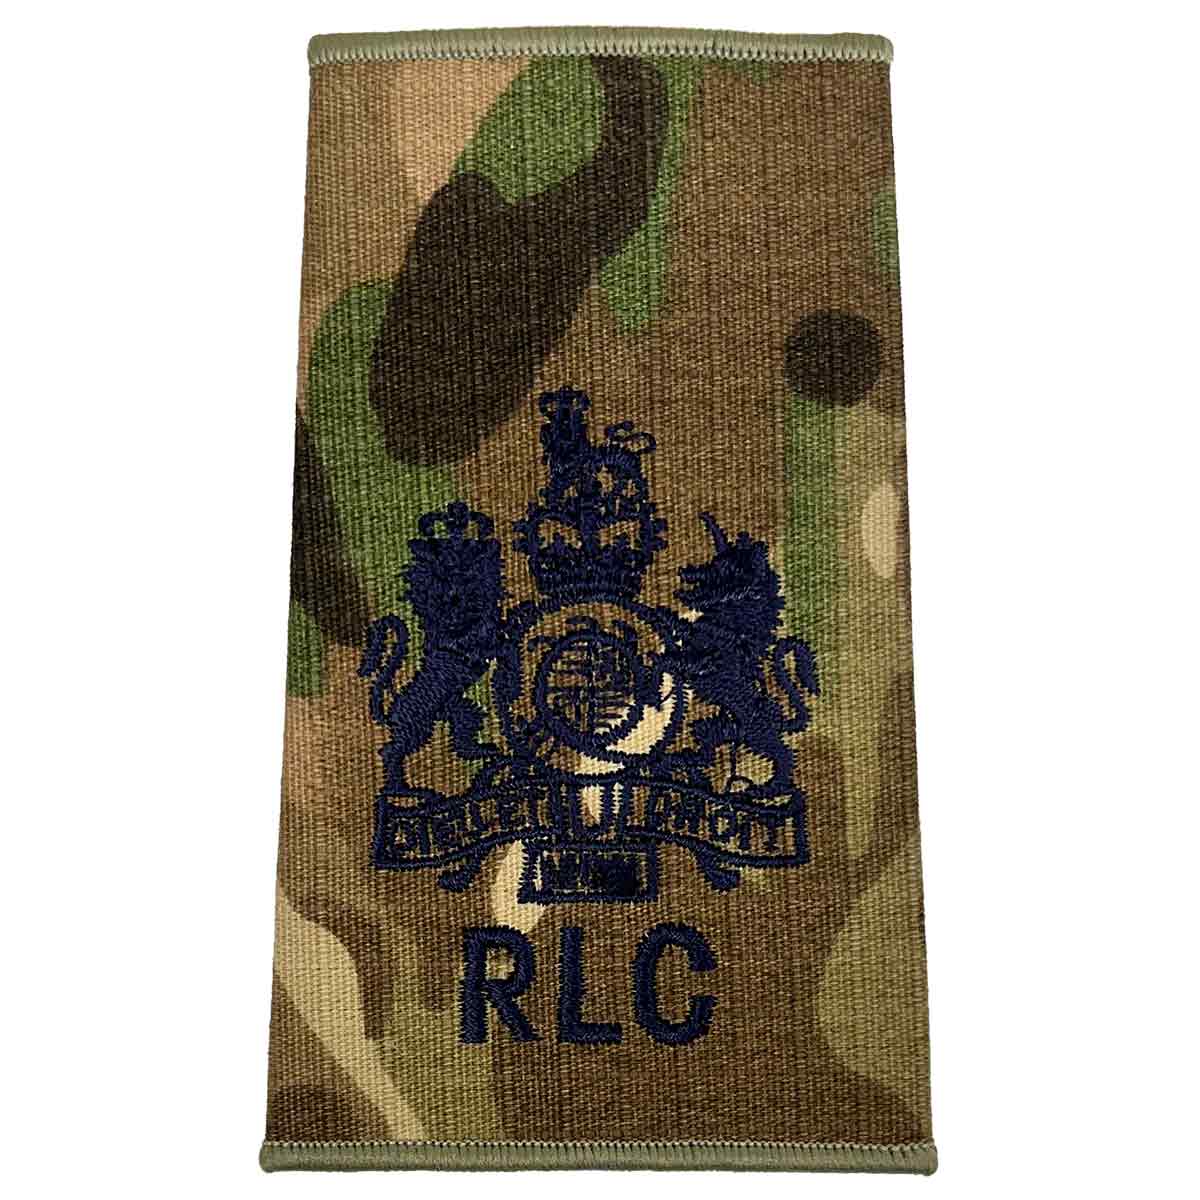 Royal Logistics Corps RLC Multicam Rank Slides (Pair) - John Bull Clothing